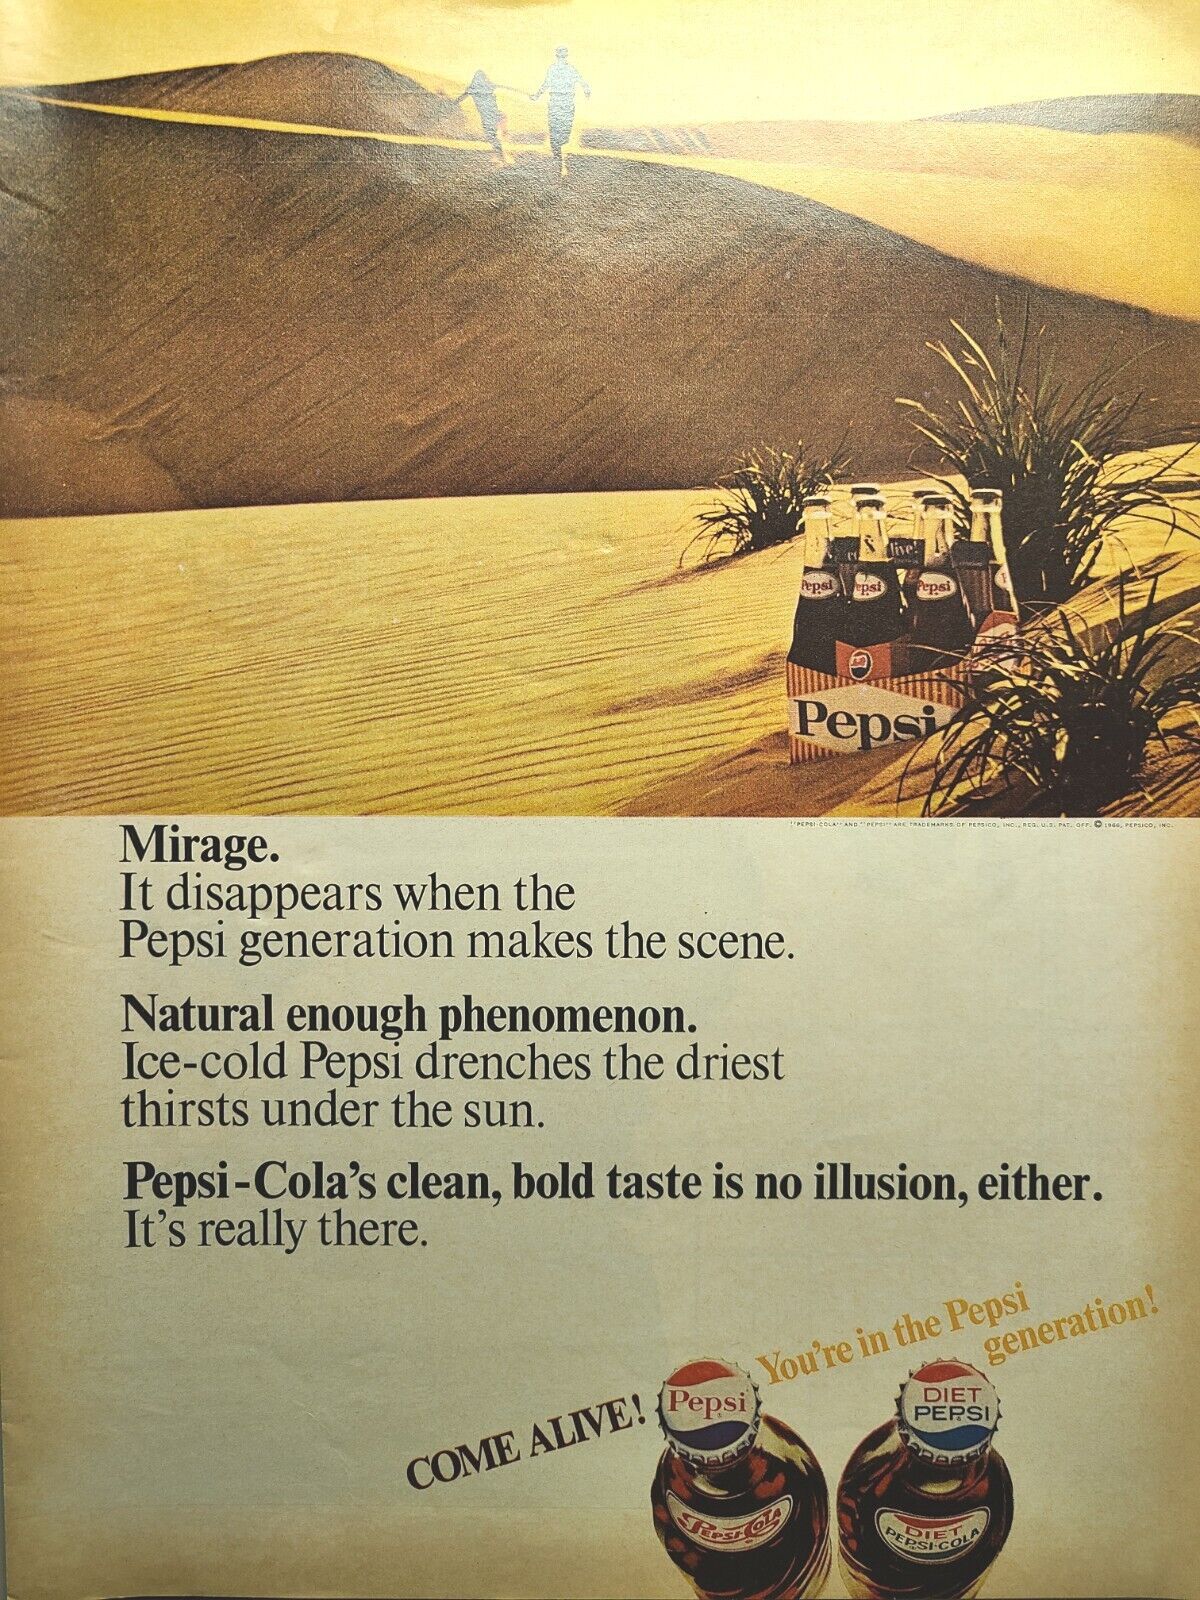 Pepsi and Diet Pepsi New Generation Sand Dunes Mirage Vintage Print Ad 1966